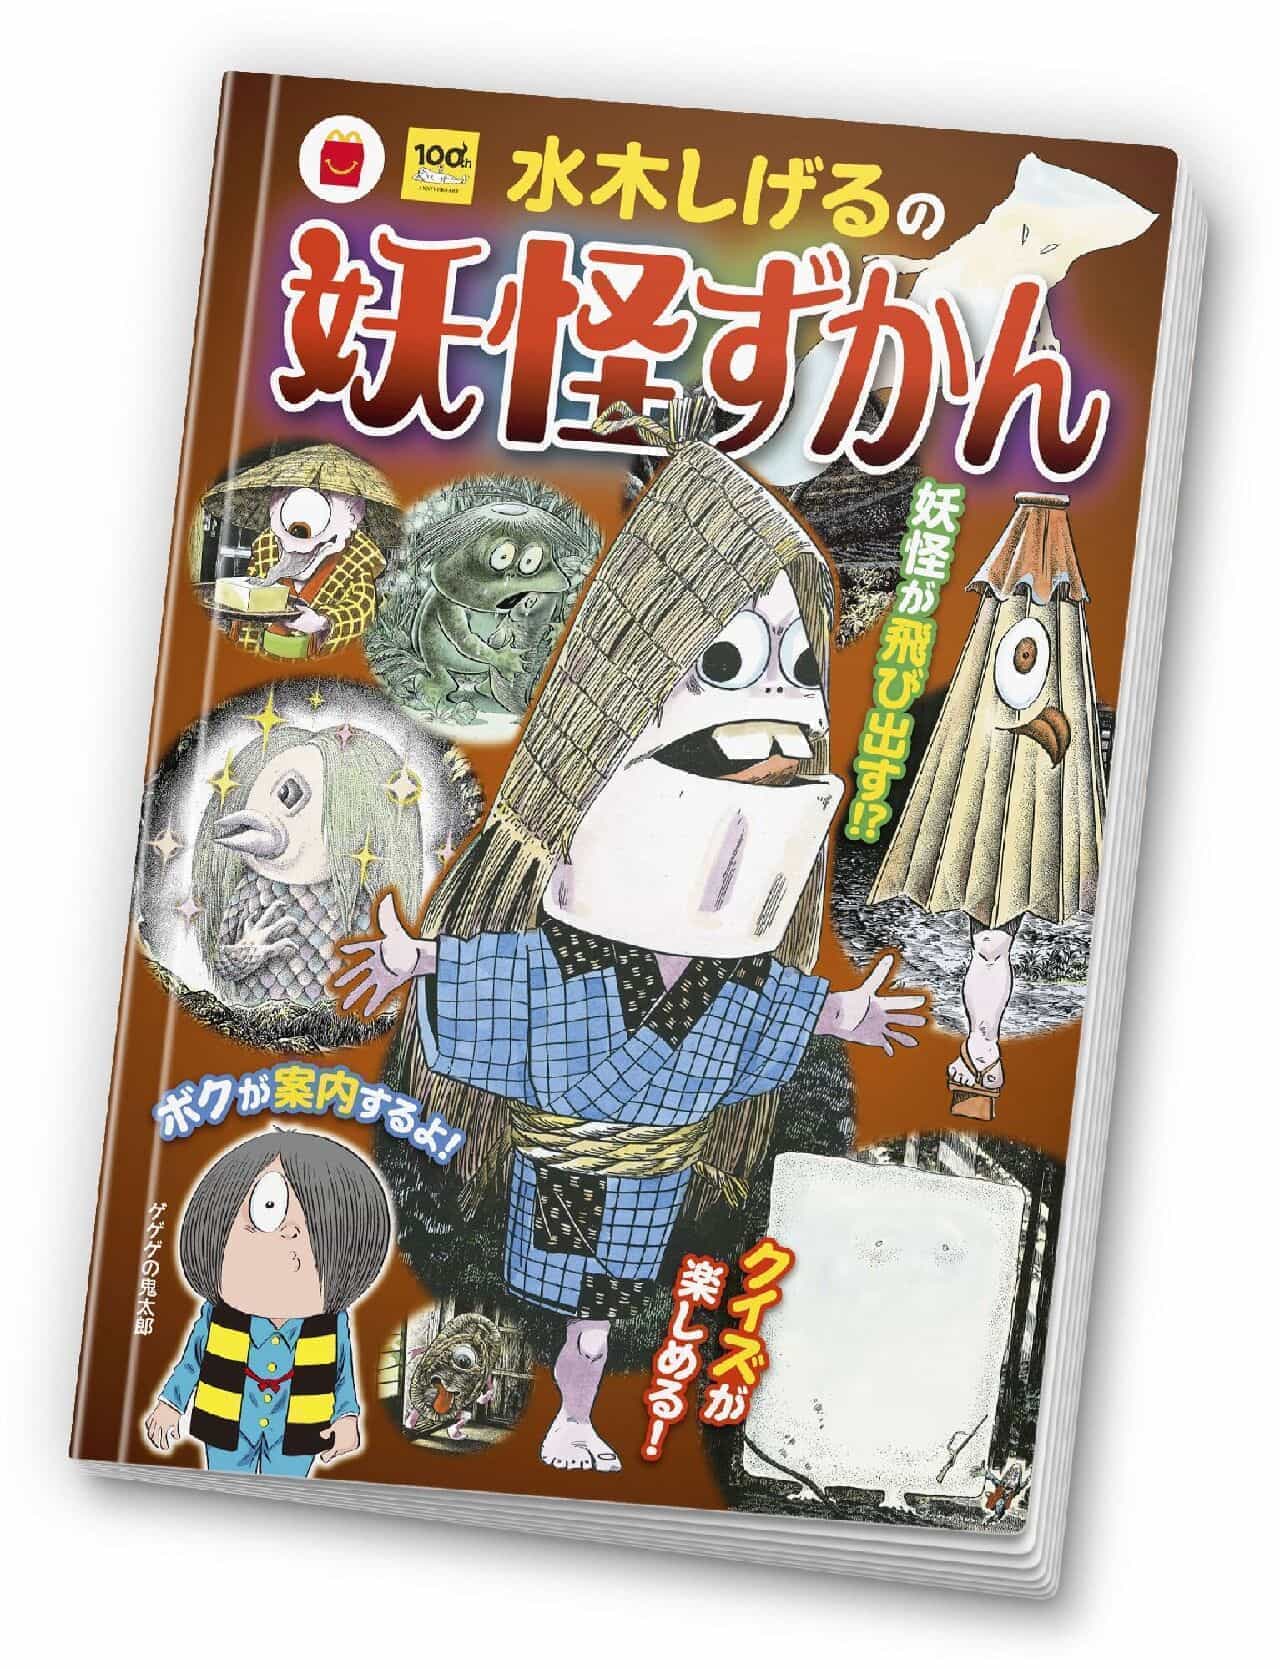 McDonald's Mini-Illustrated Book "Shigeru Mizuki's Youkai Zukan